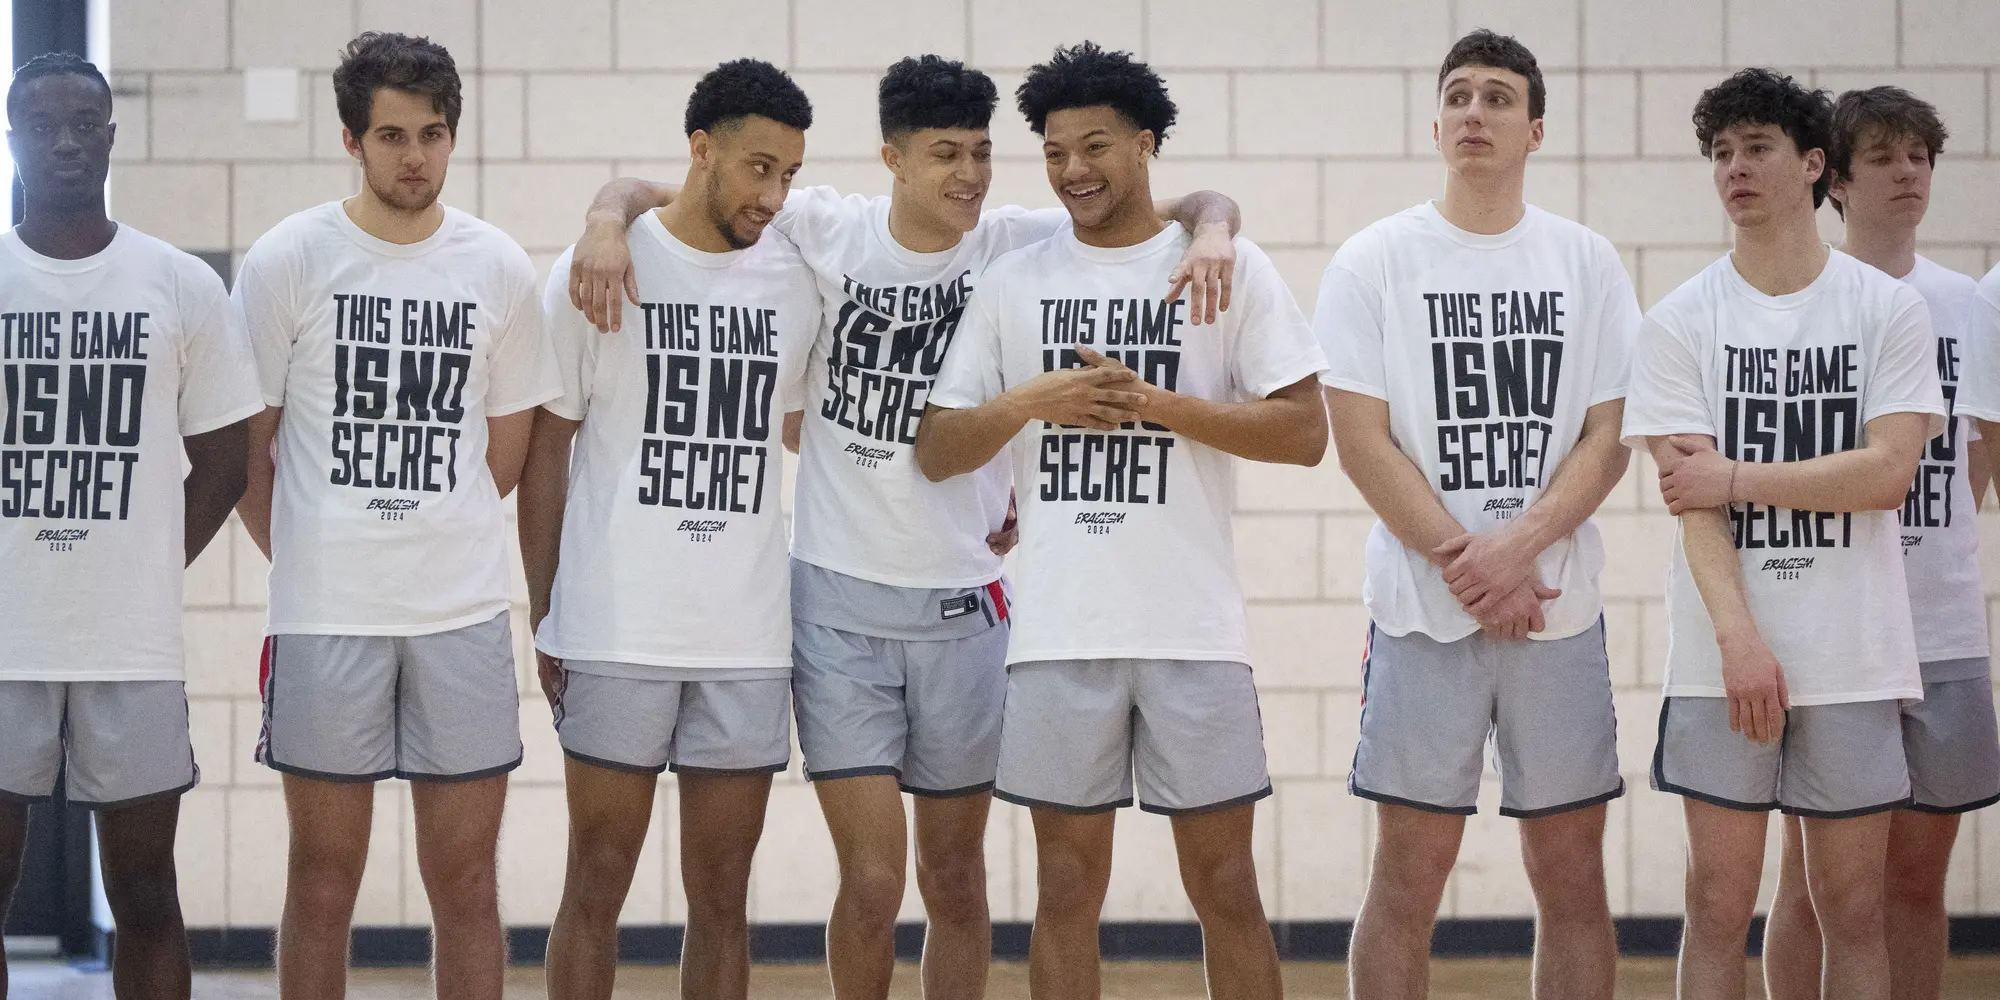 CMU's mens basketball team honors "The Secret Game."